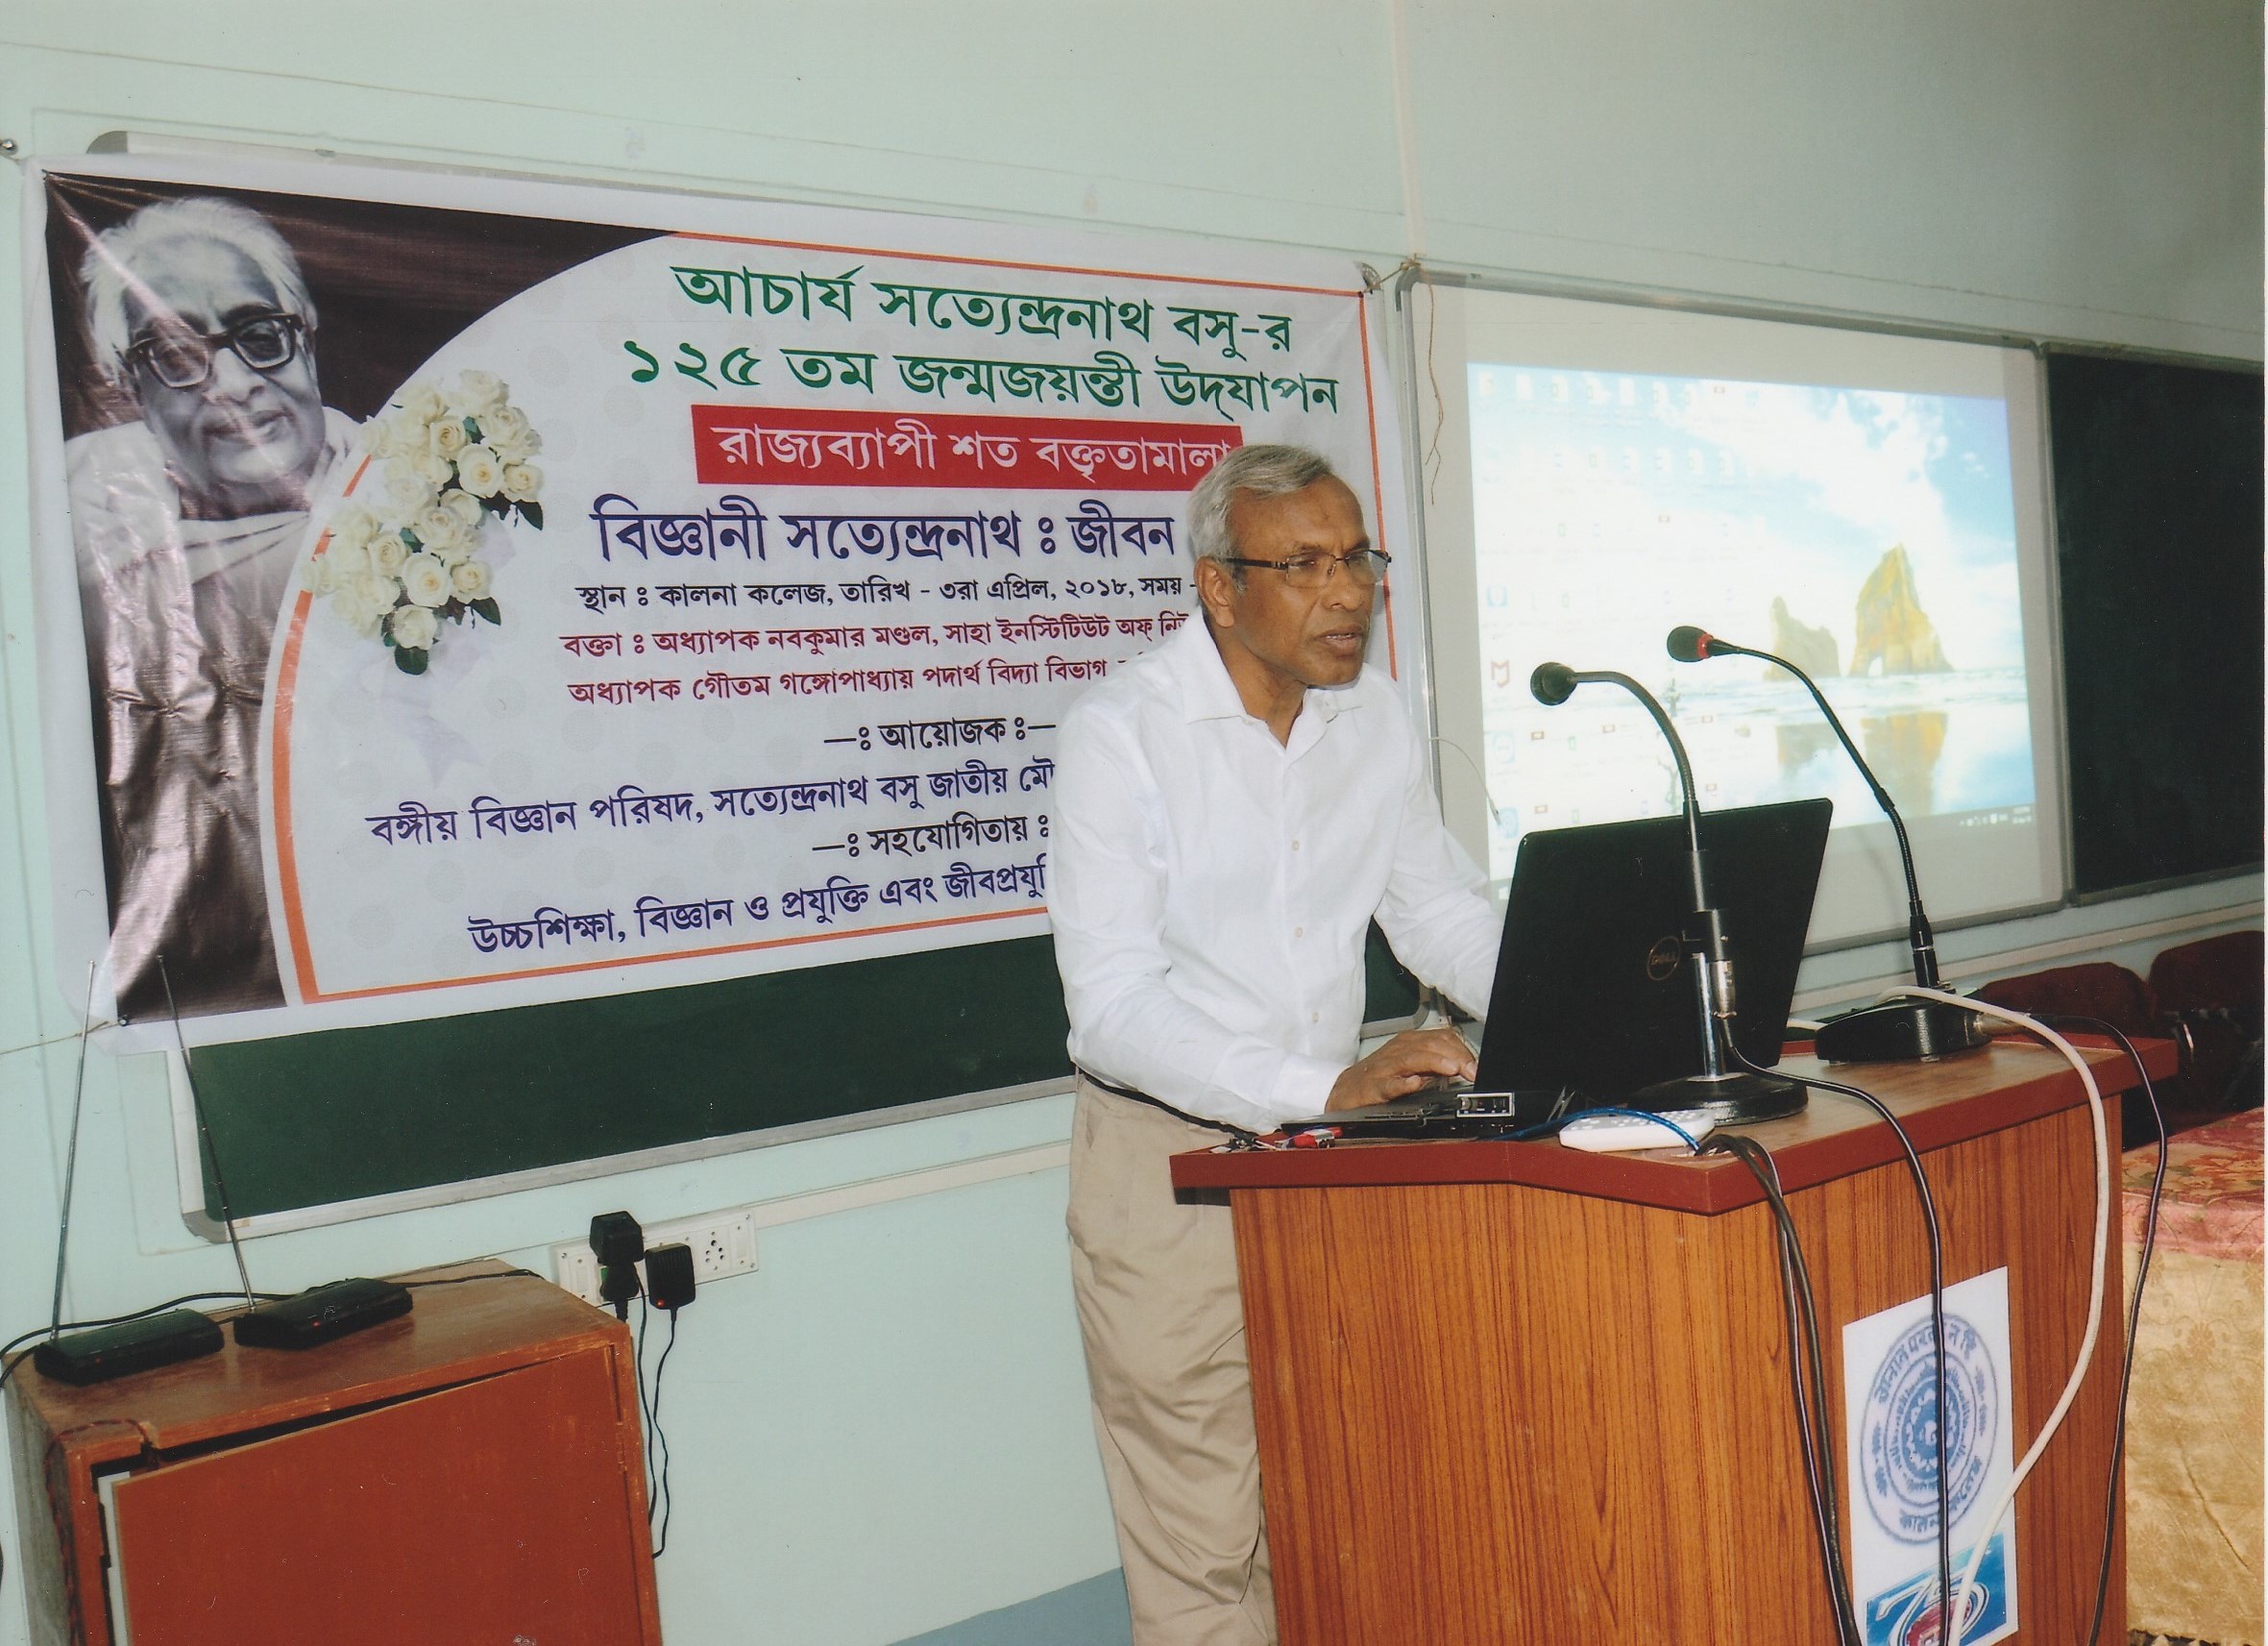 Life and Works of Prof. Satyendra Nath Bose